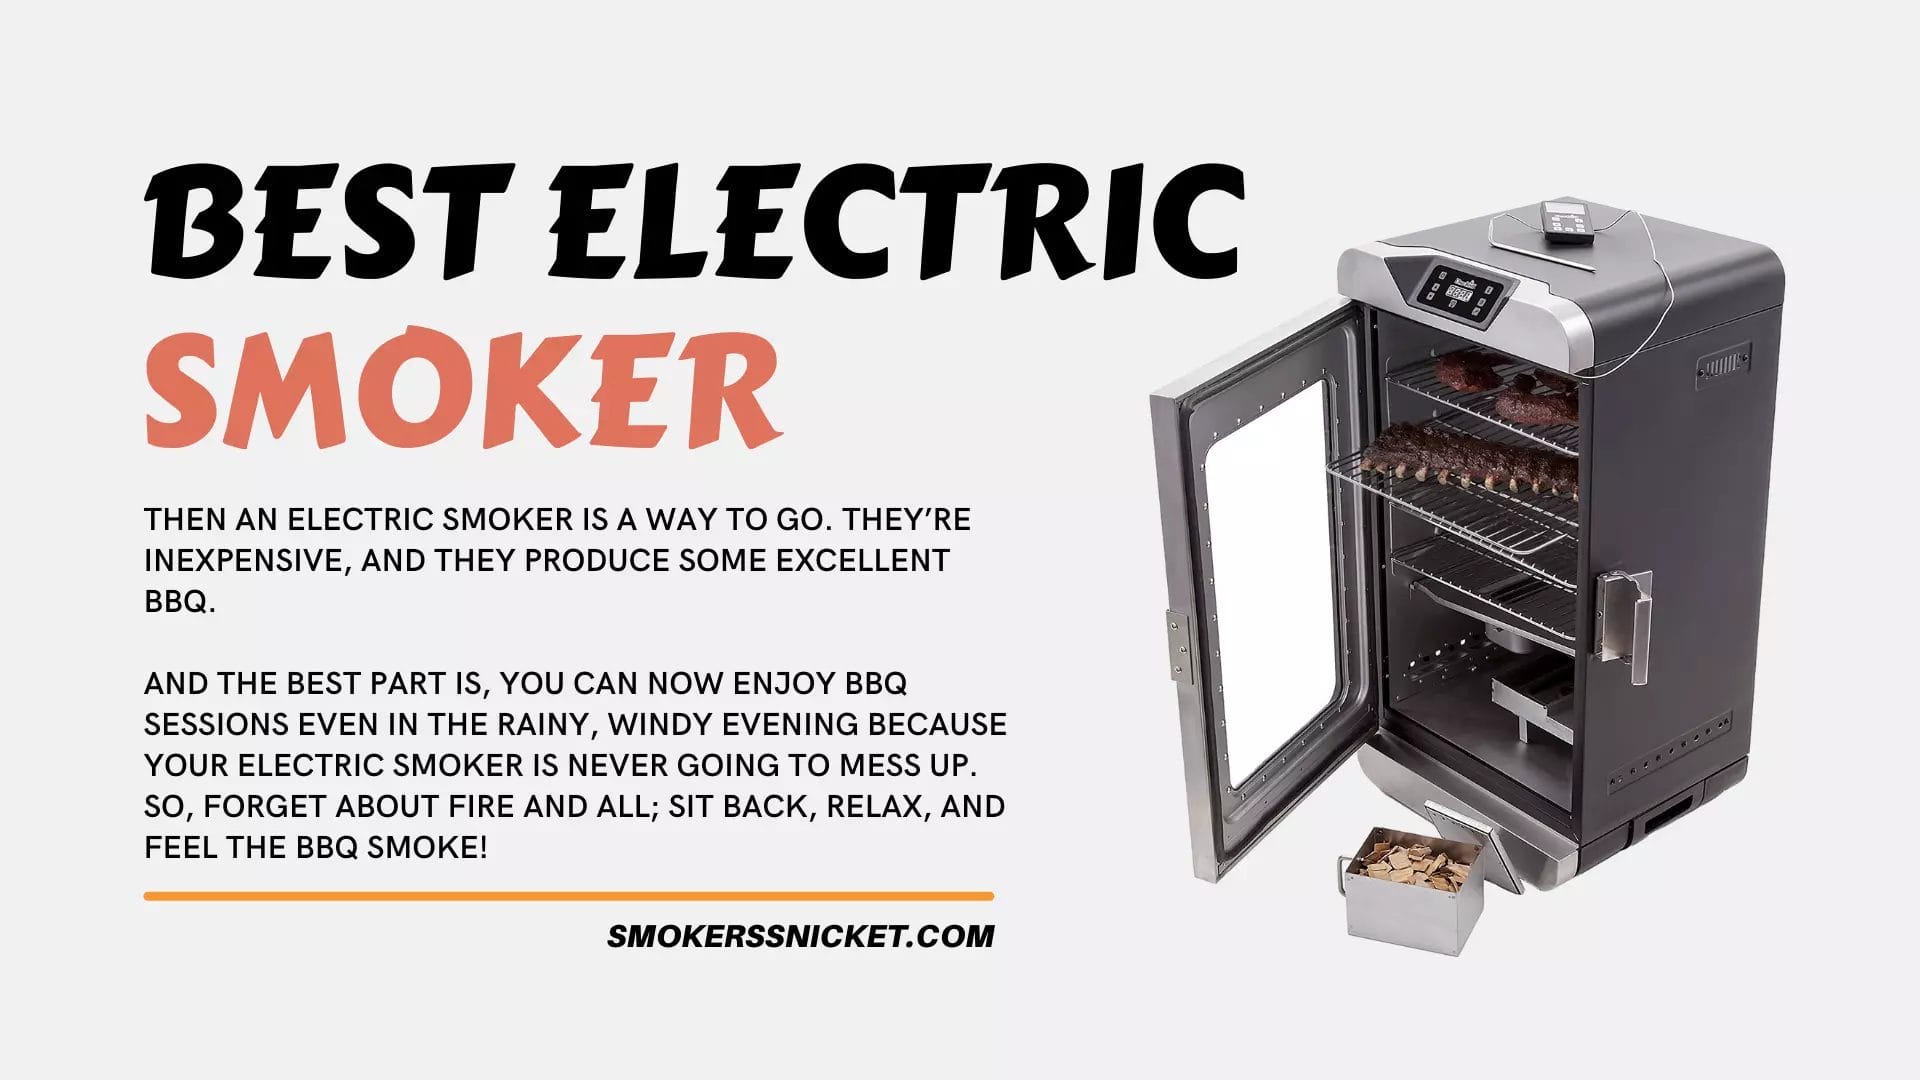 BEST ELECTRIC SMOKER